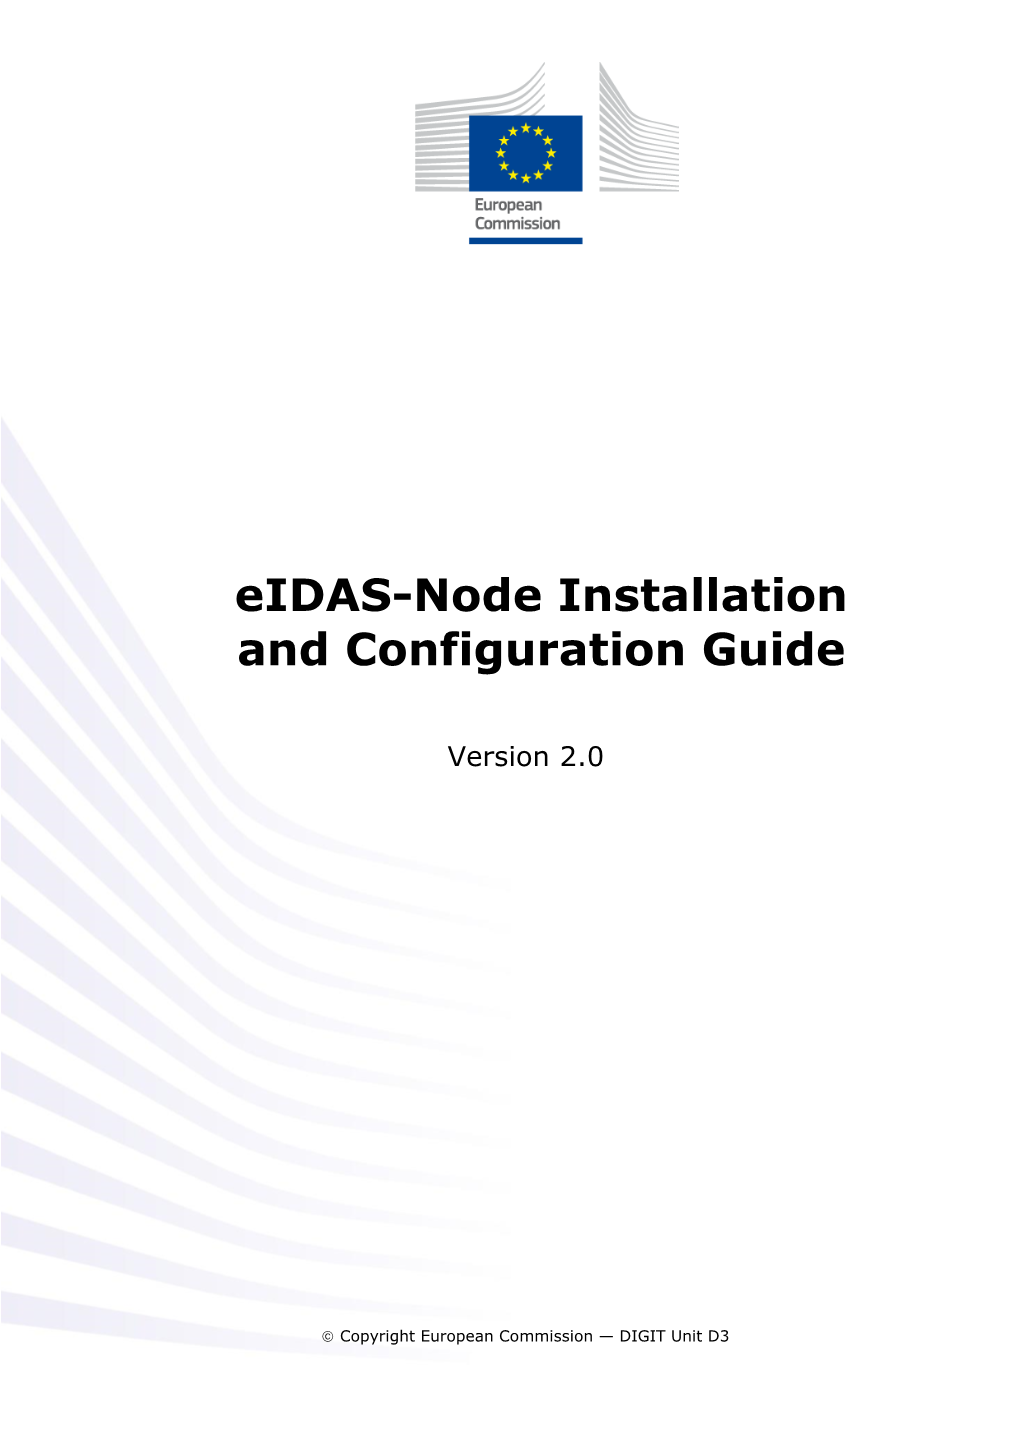 Eidas-Node Installation and Configuration Guide